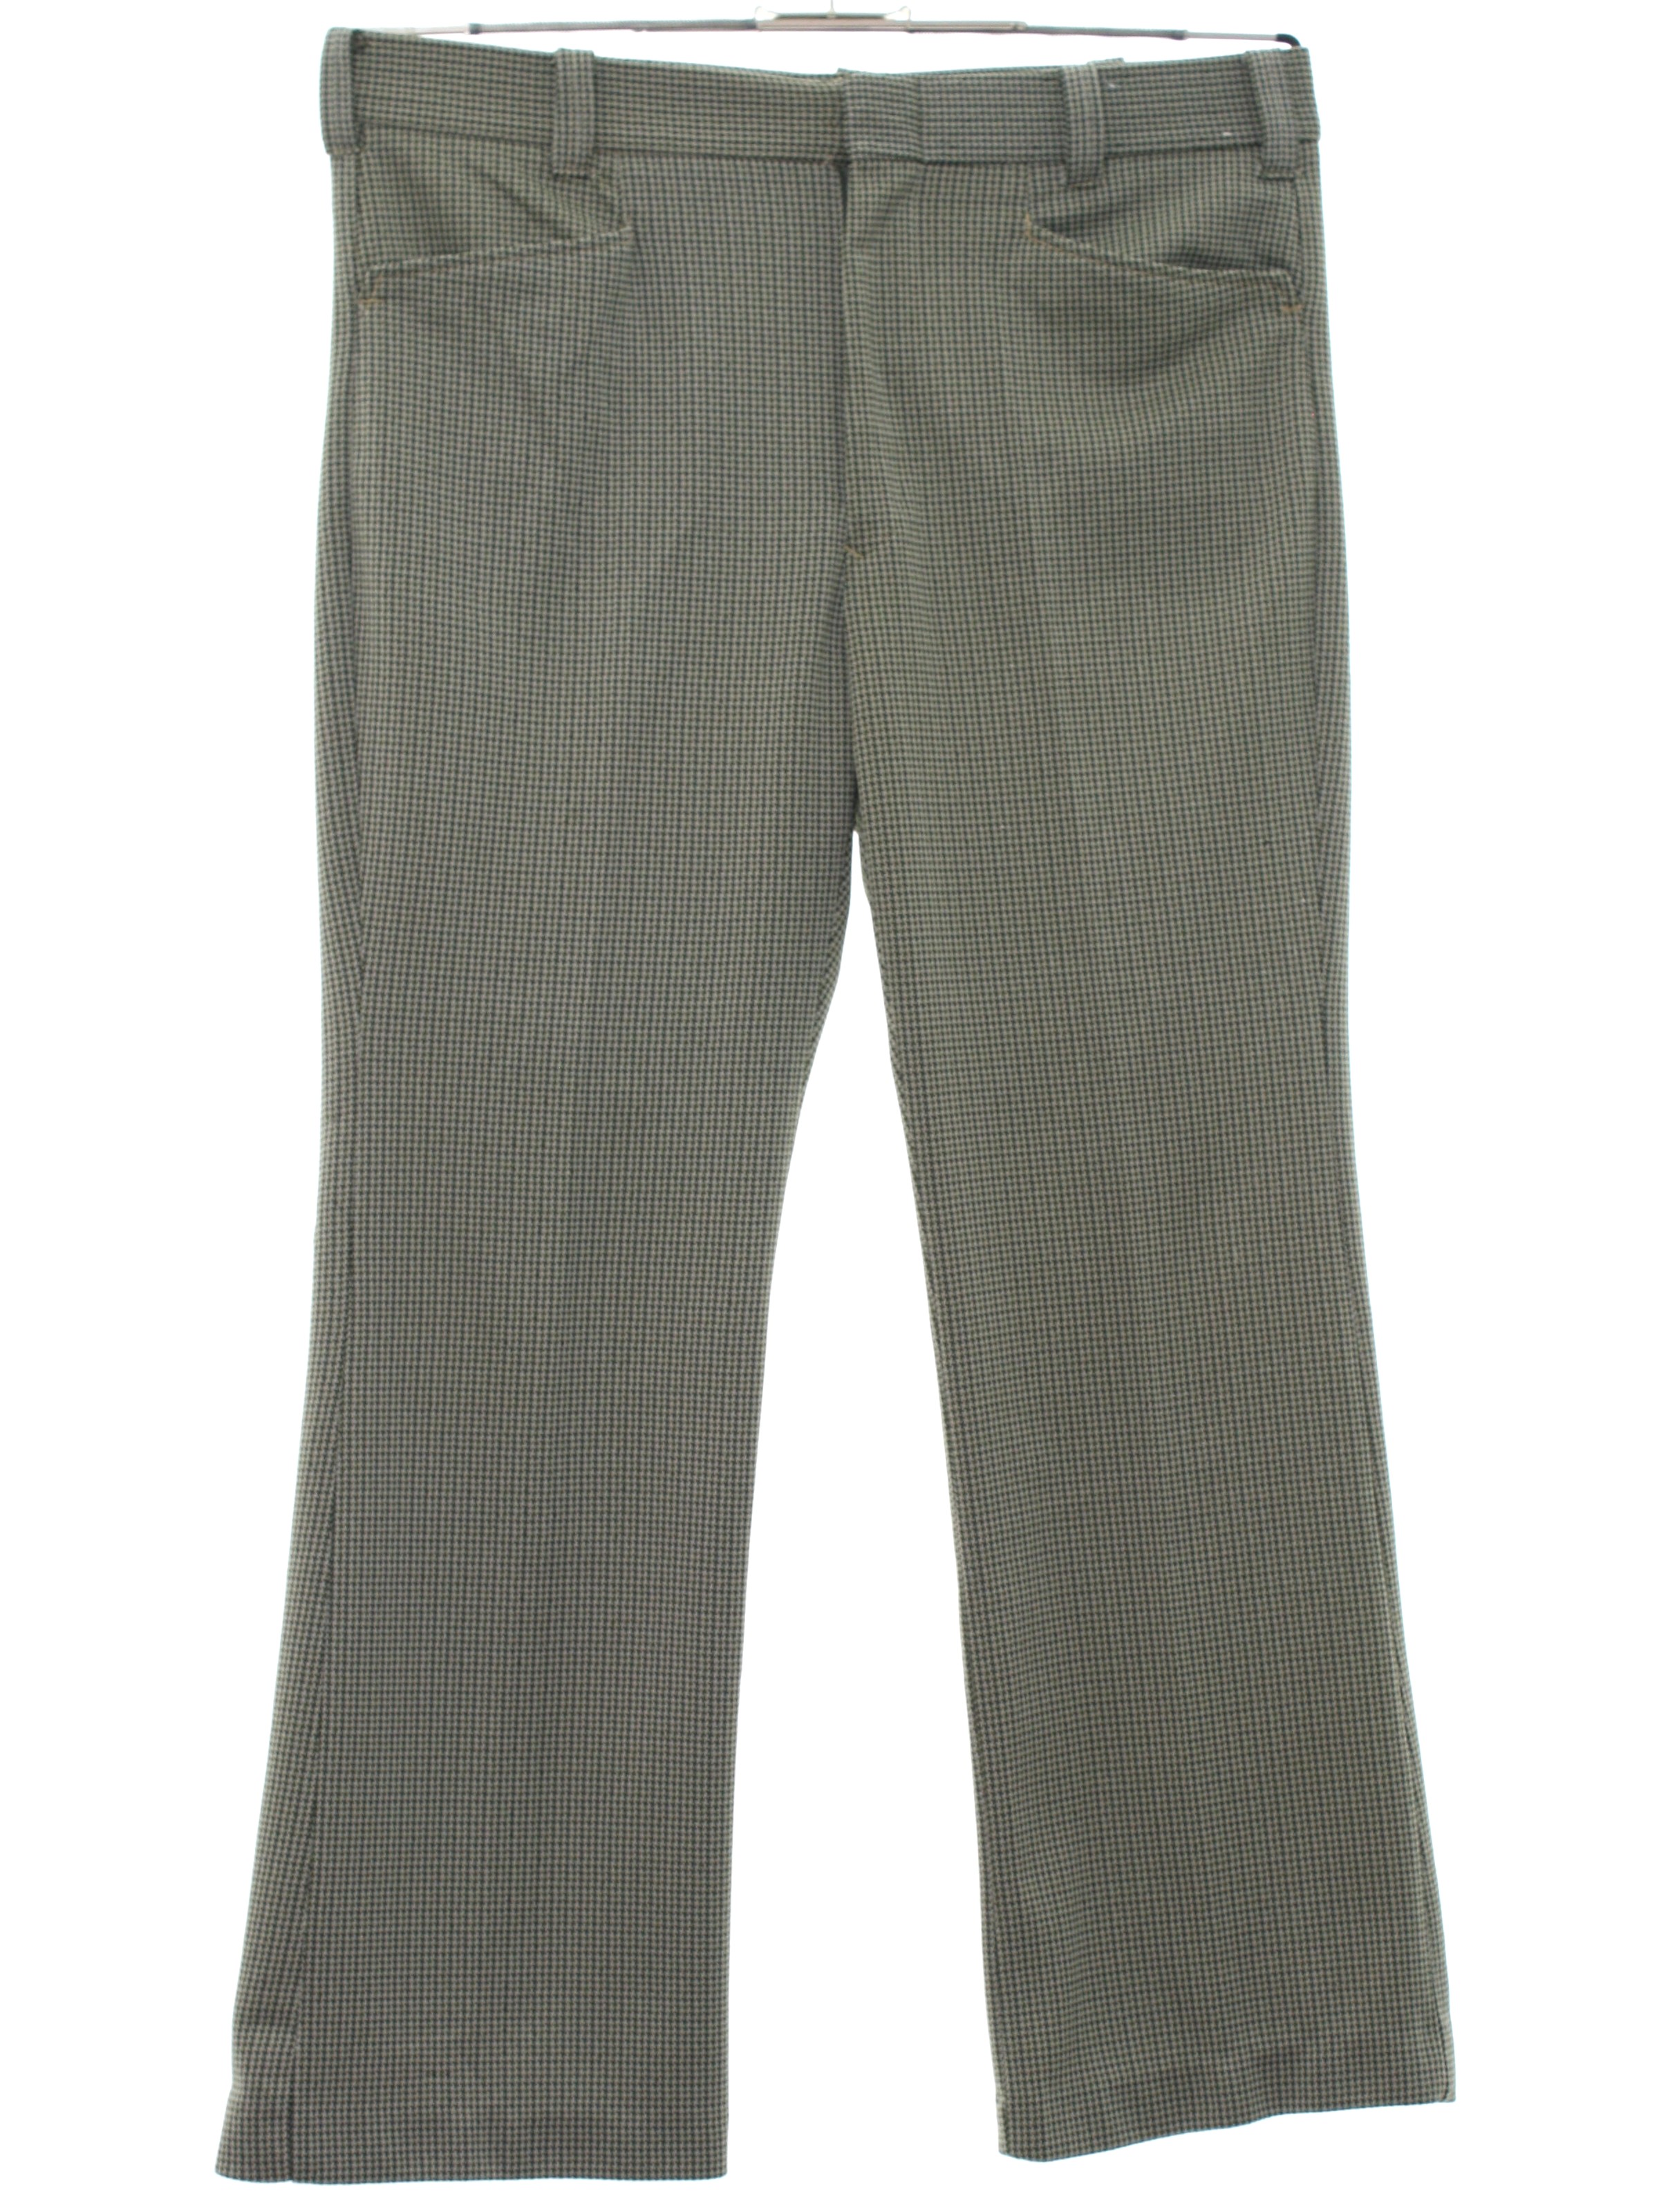 1970s Vintage Flared Pants / Flares: 70s -Missing Label- Mens white ...